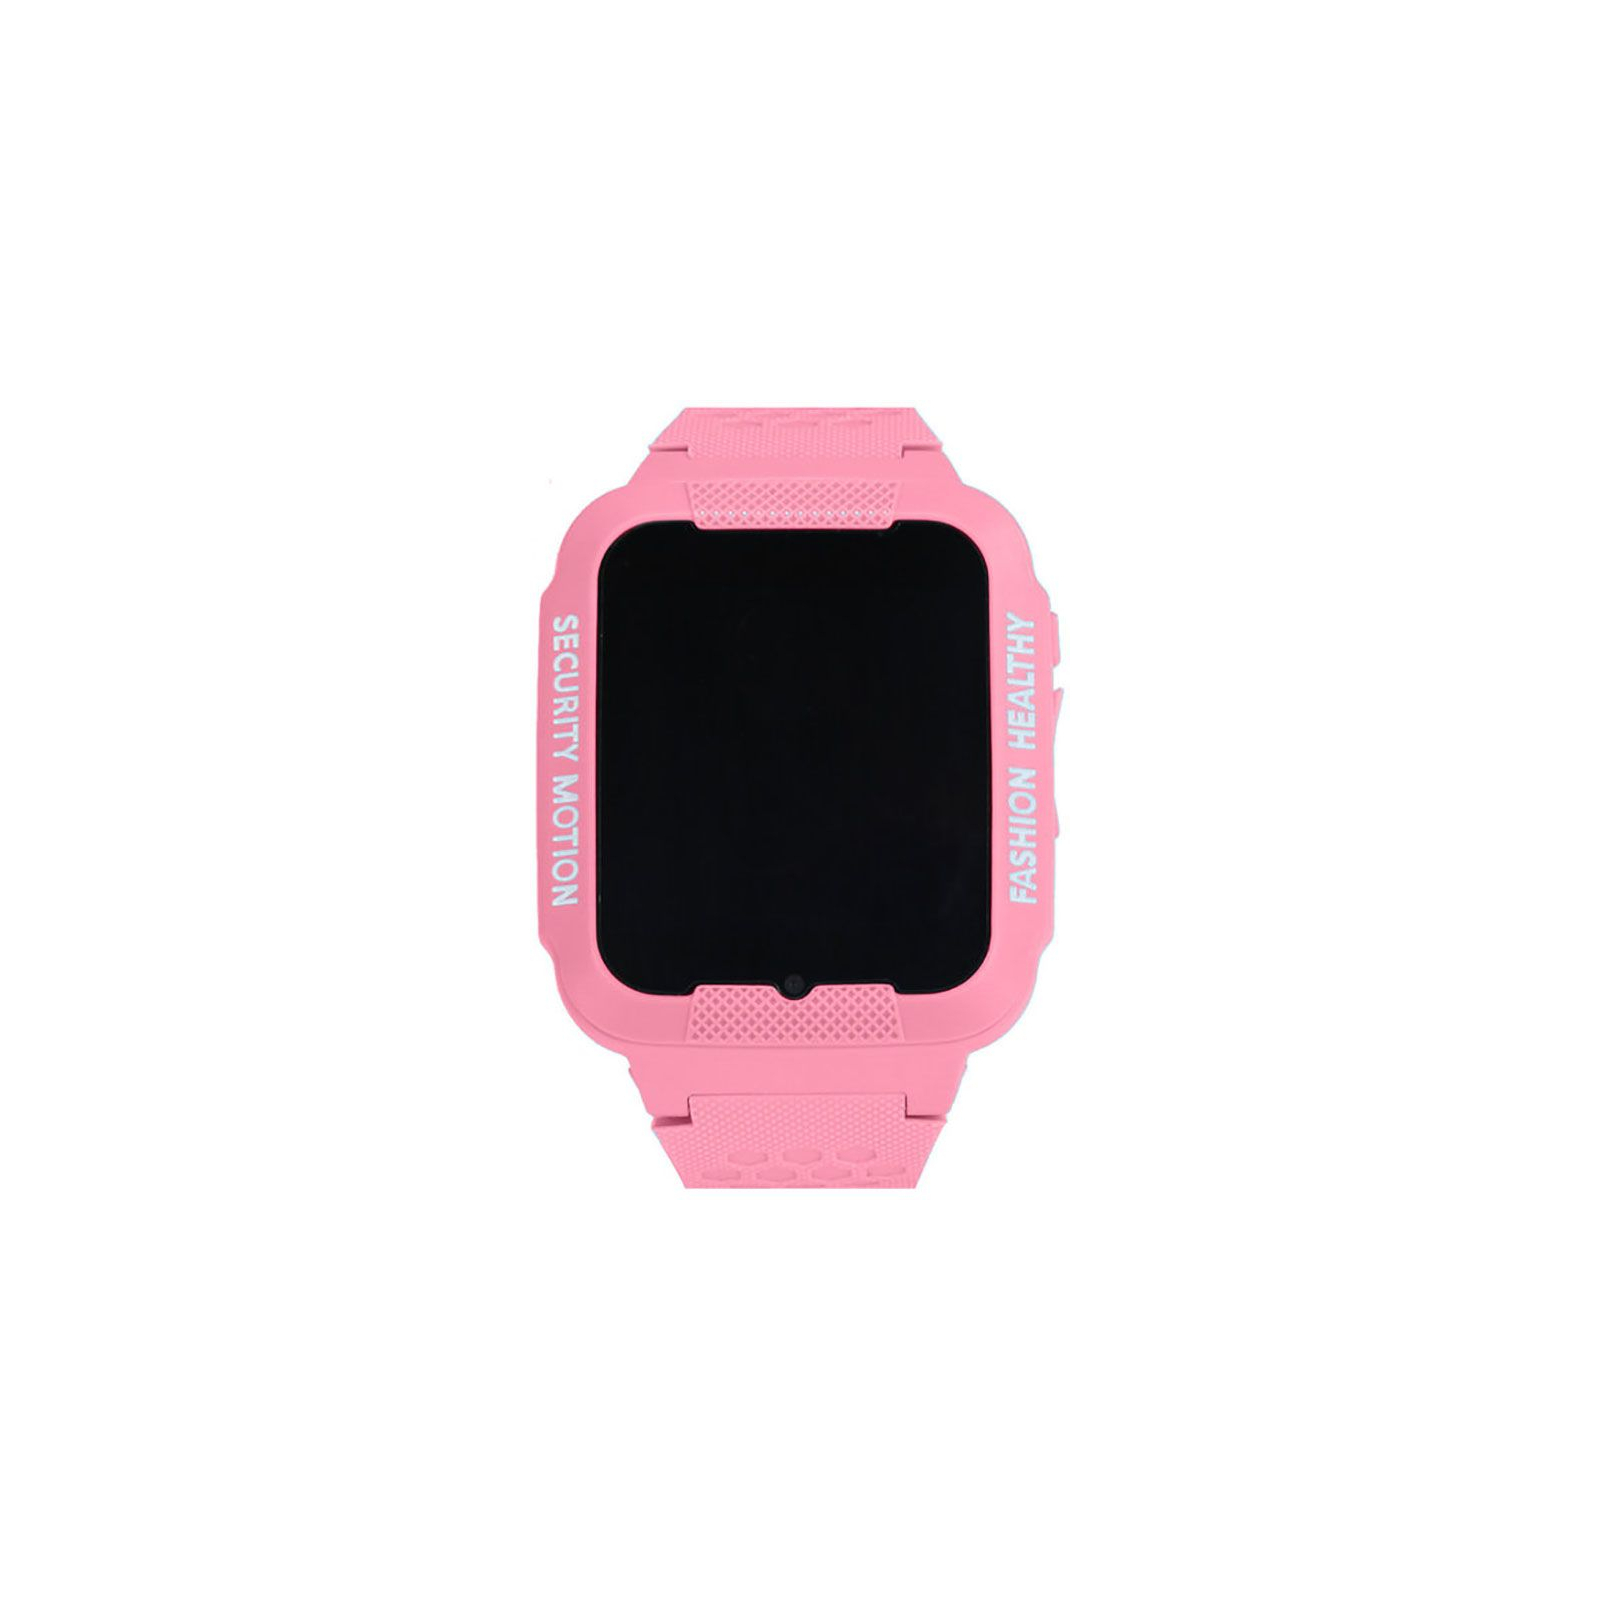 Смарт-часы UWatch K3 Kids waterproof smart watch Blue (F_51807)